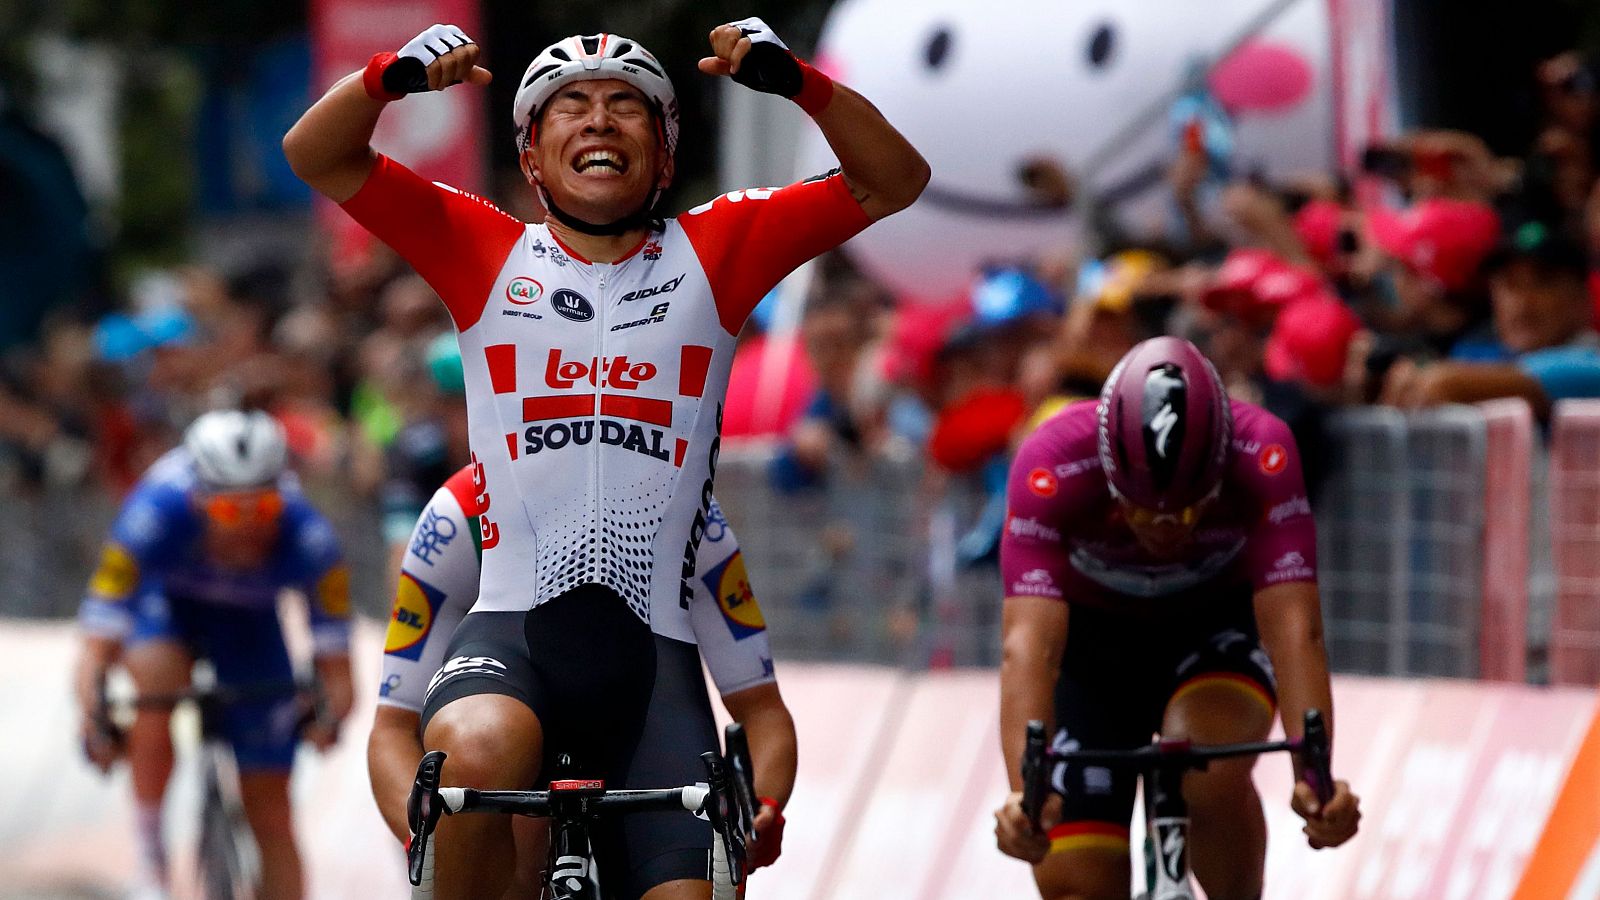 El australiano Caleb Ewan (Lotto) celebra su victoria en la octava etapa del Giro.